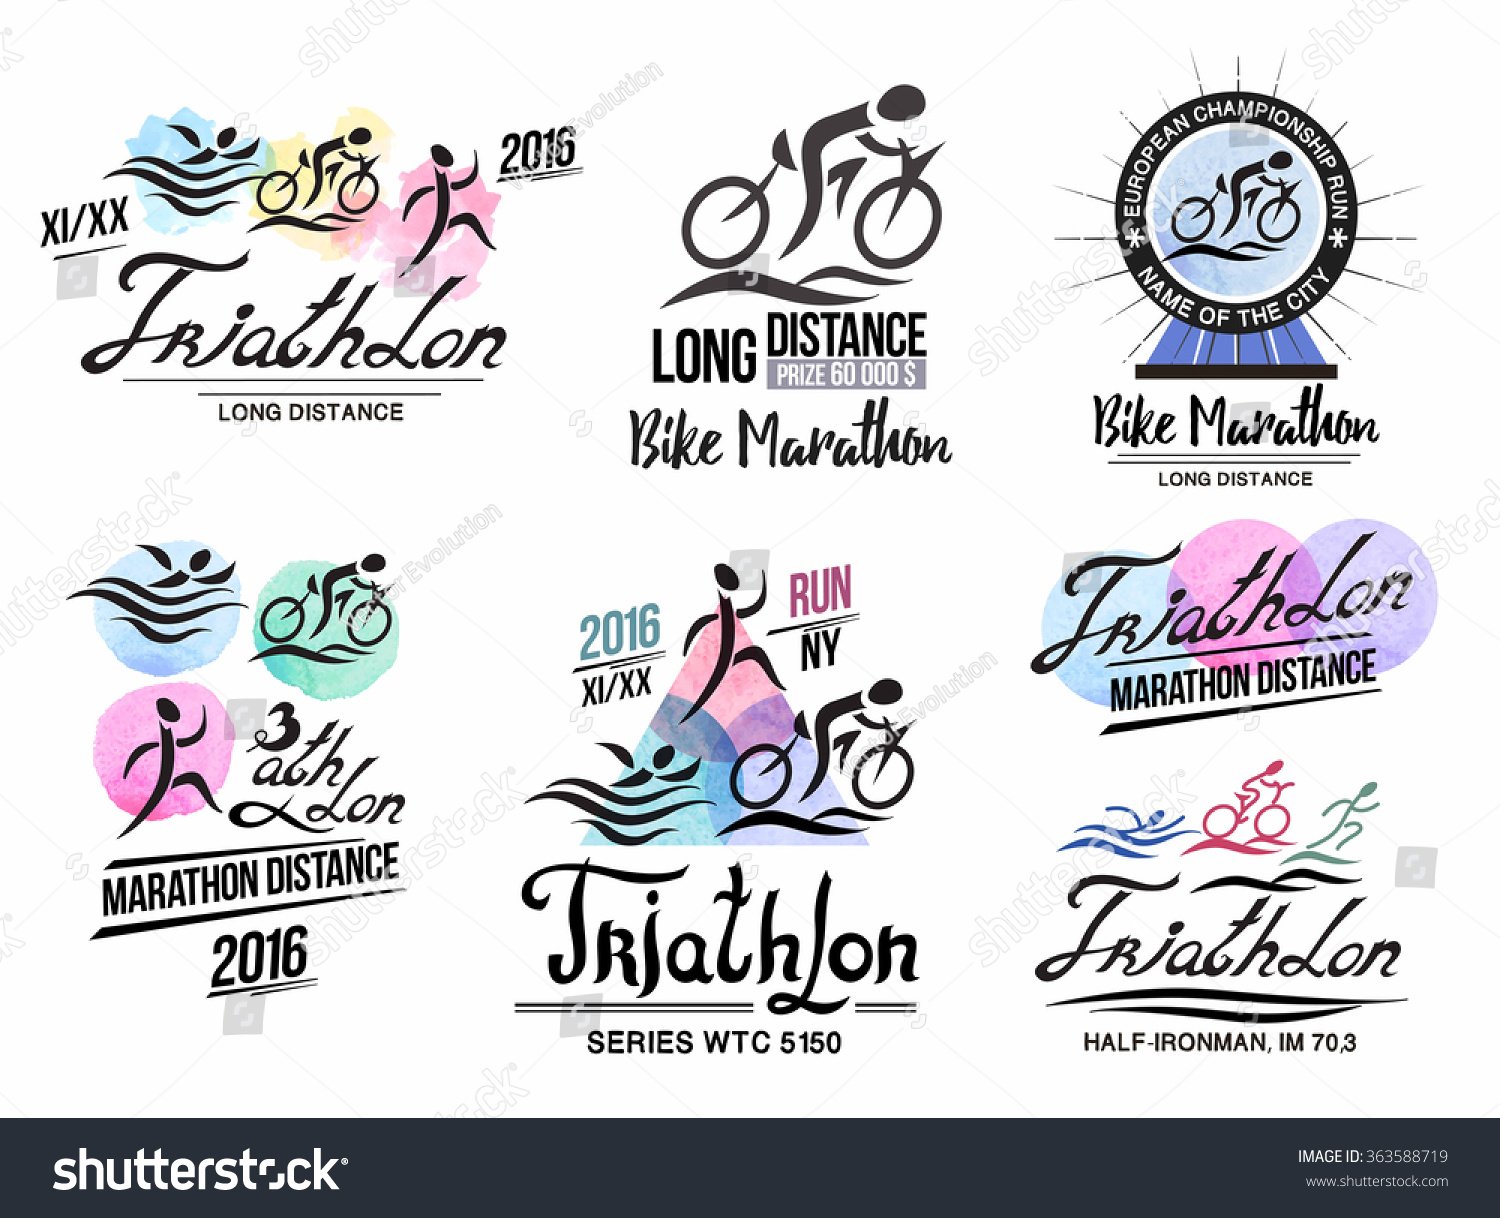 Triathlon Logo. Sports Logo With Elements Of Calligraphy. Bike Marathon ...